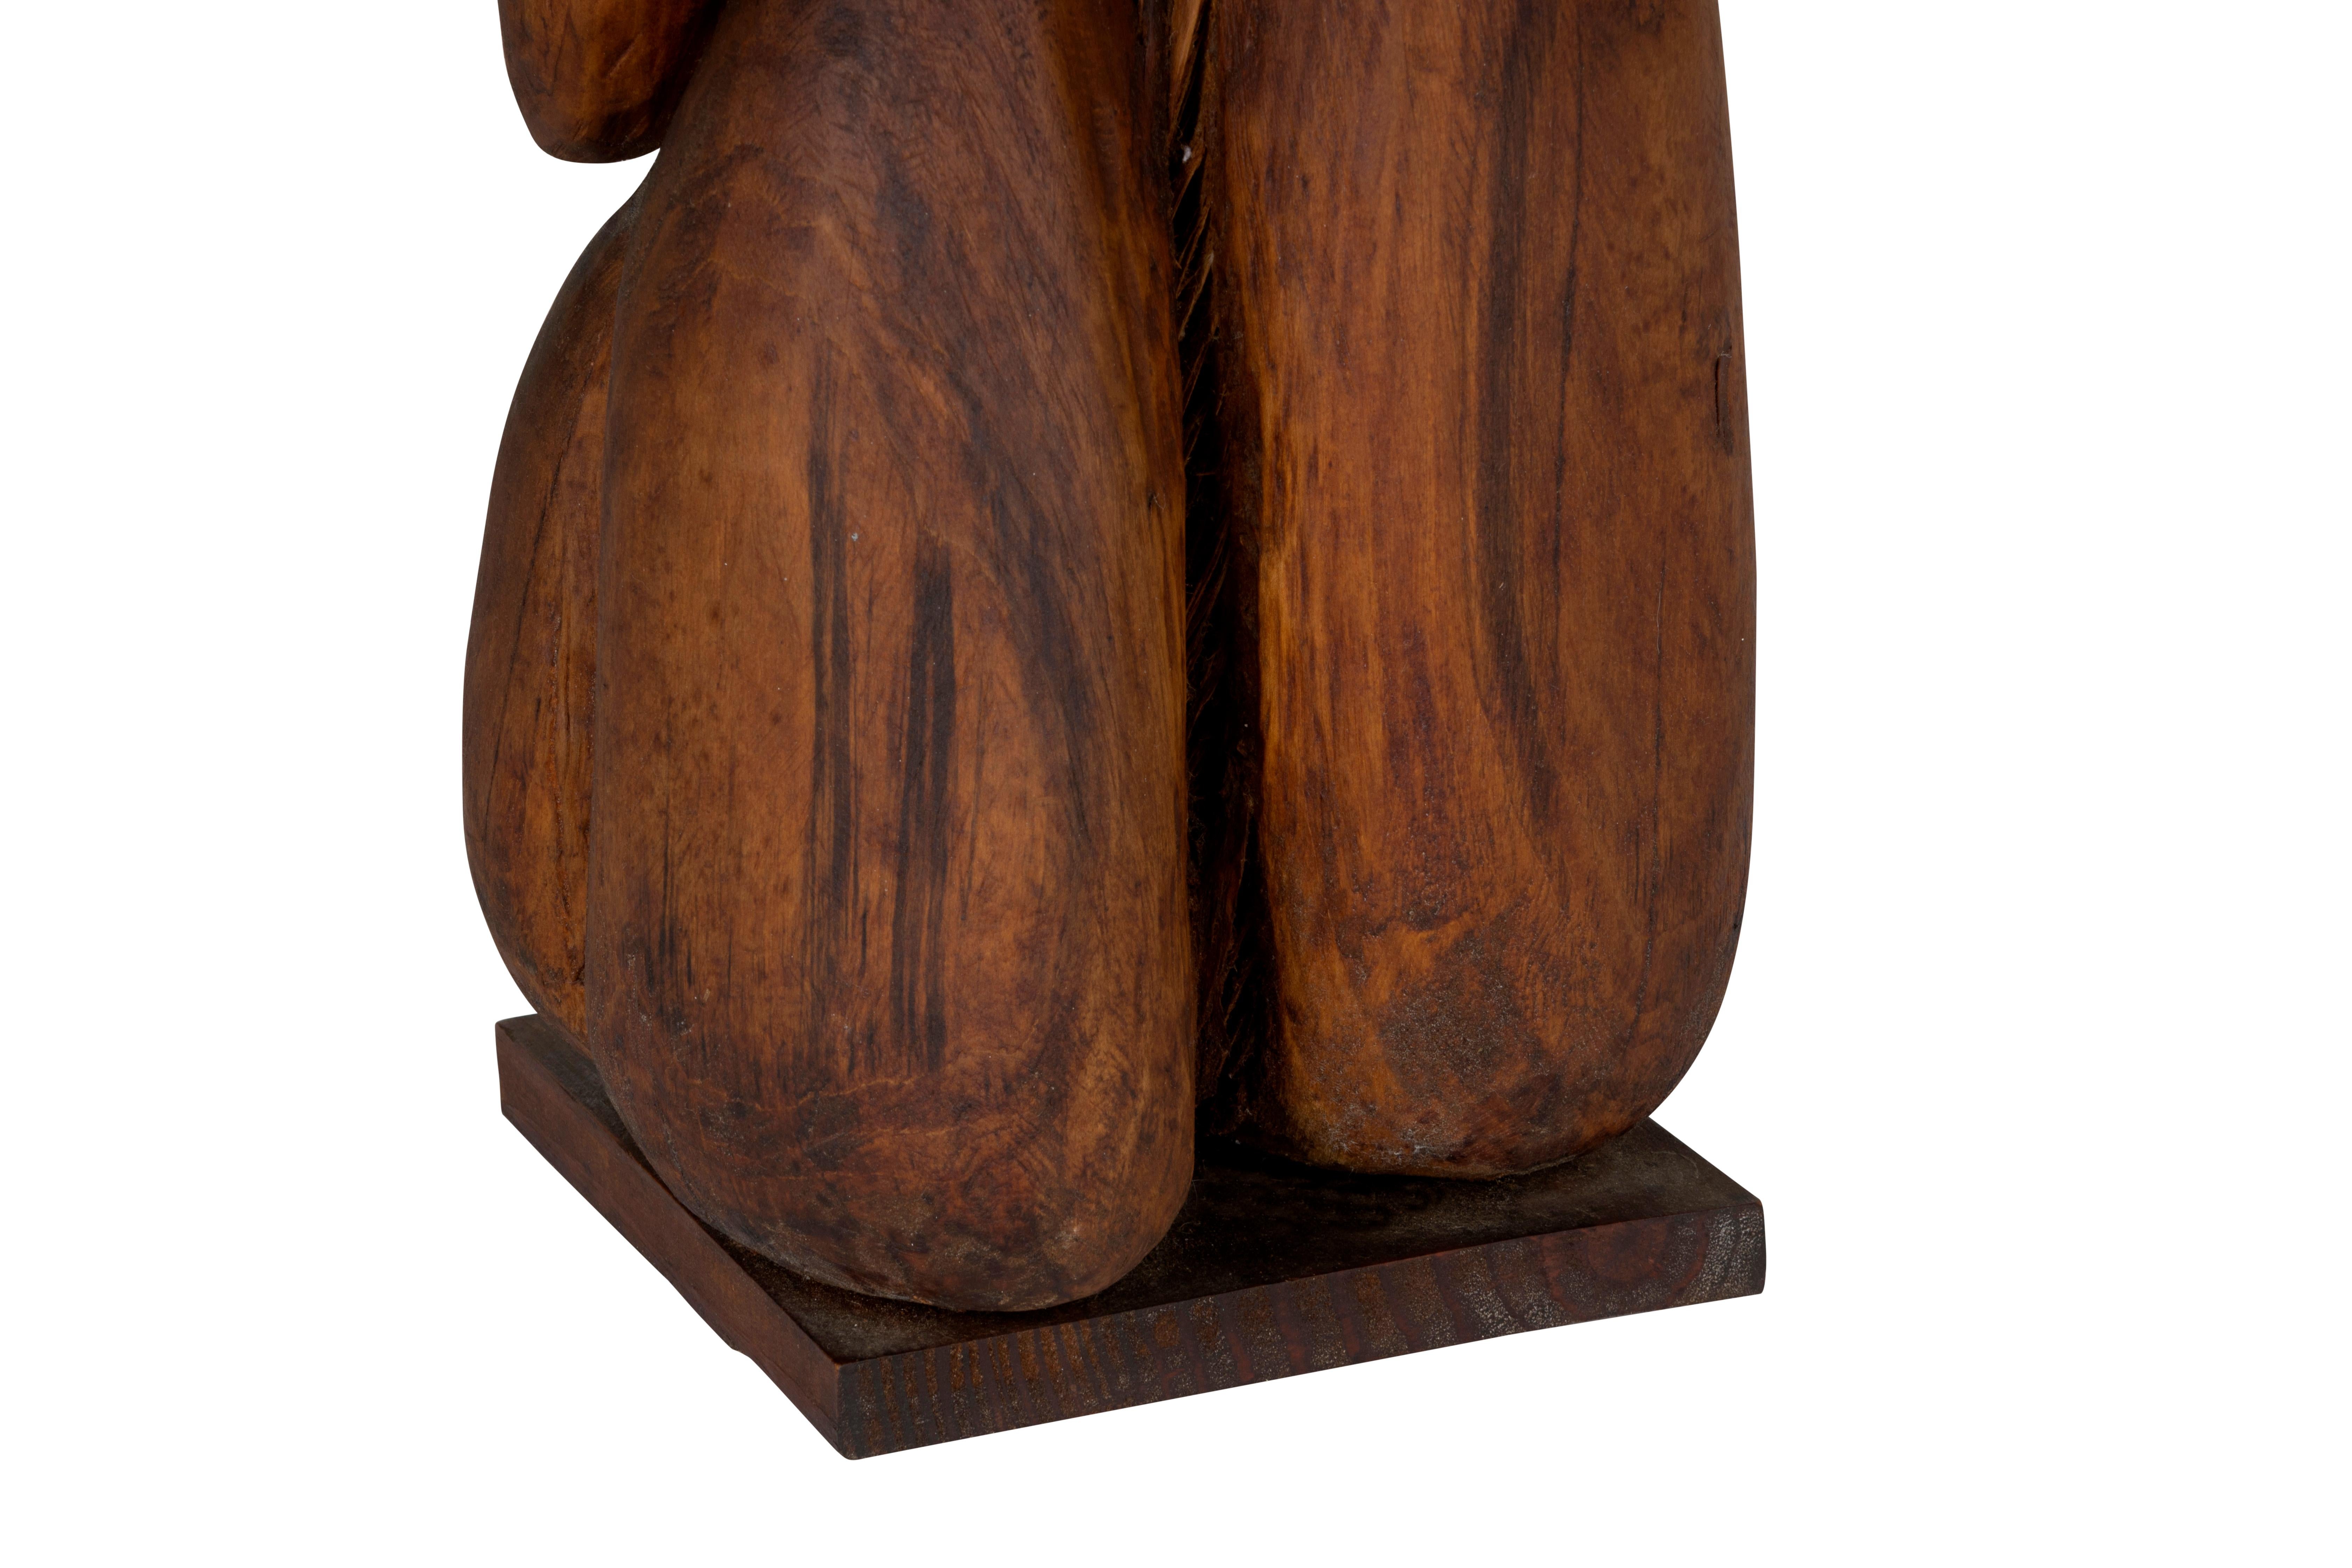 Organic Modern Biomorphic Wood Sculpture by Wendell Upchurch